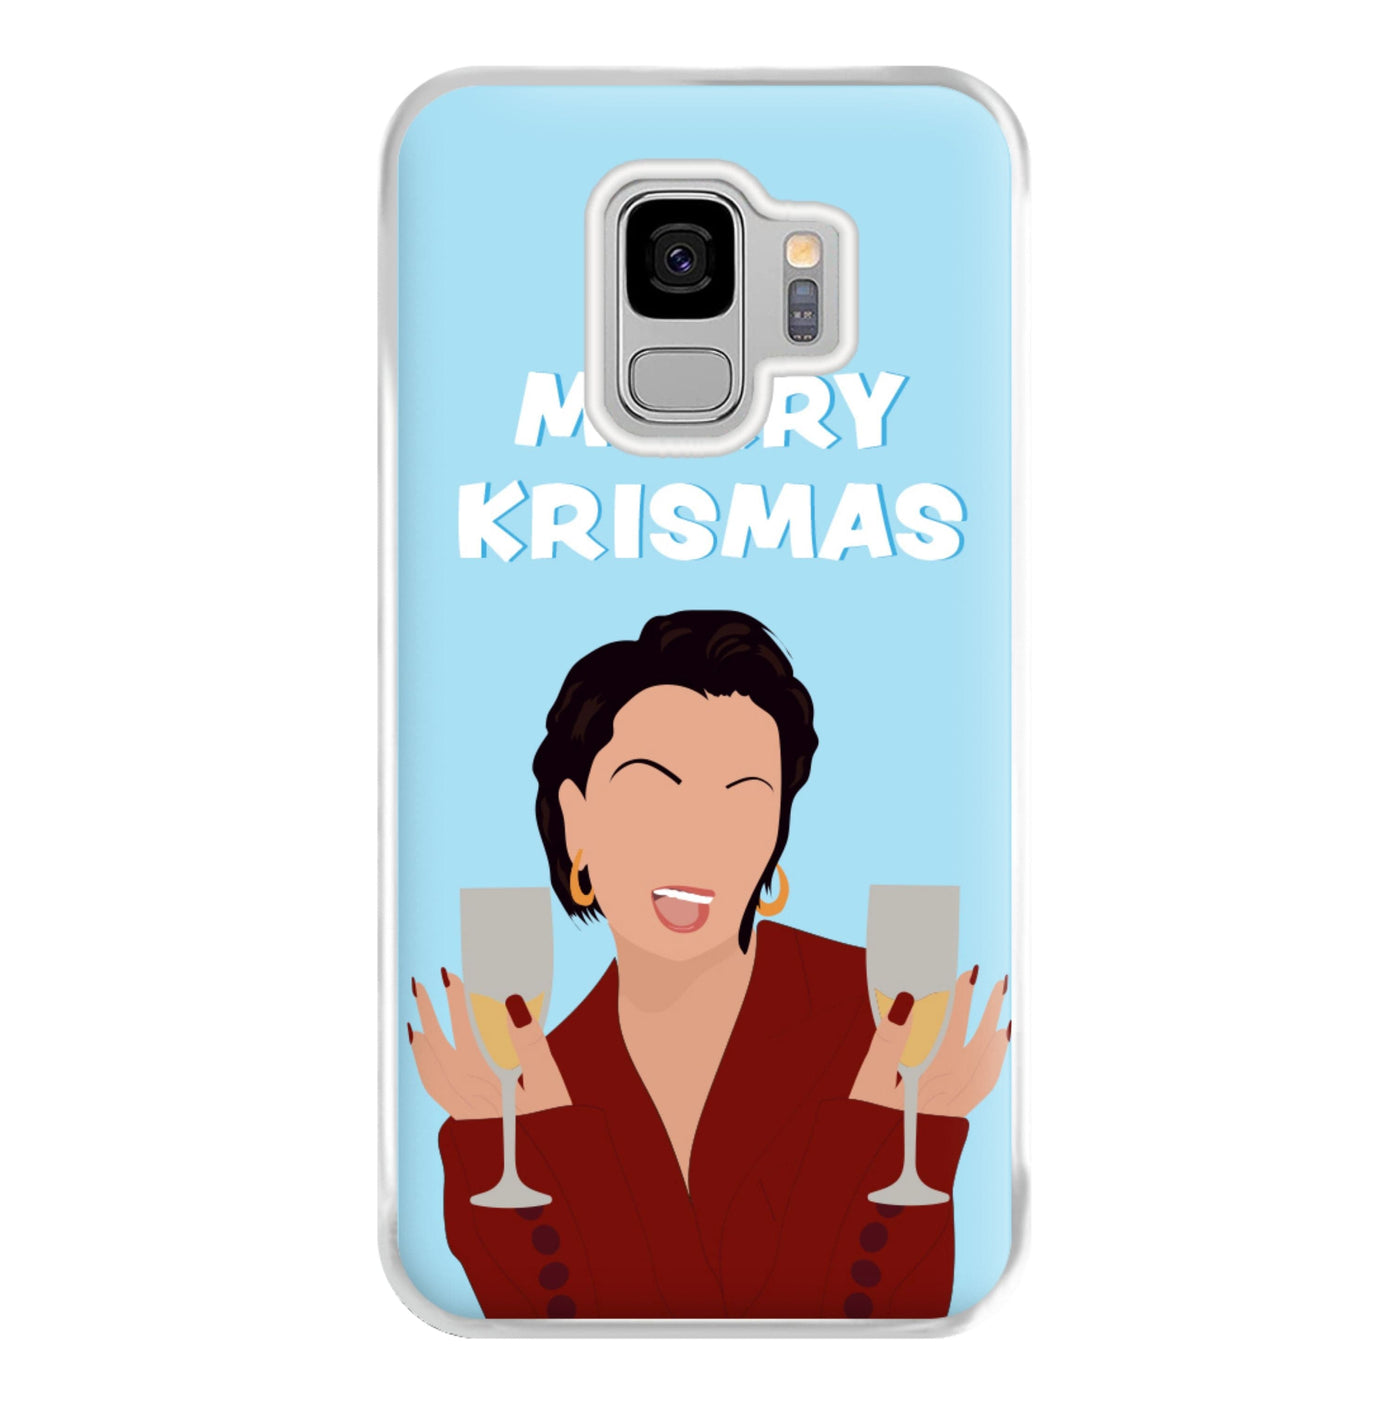 Merry Krismas - Kardashian Christmas Phone Case